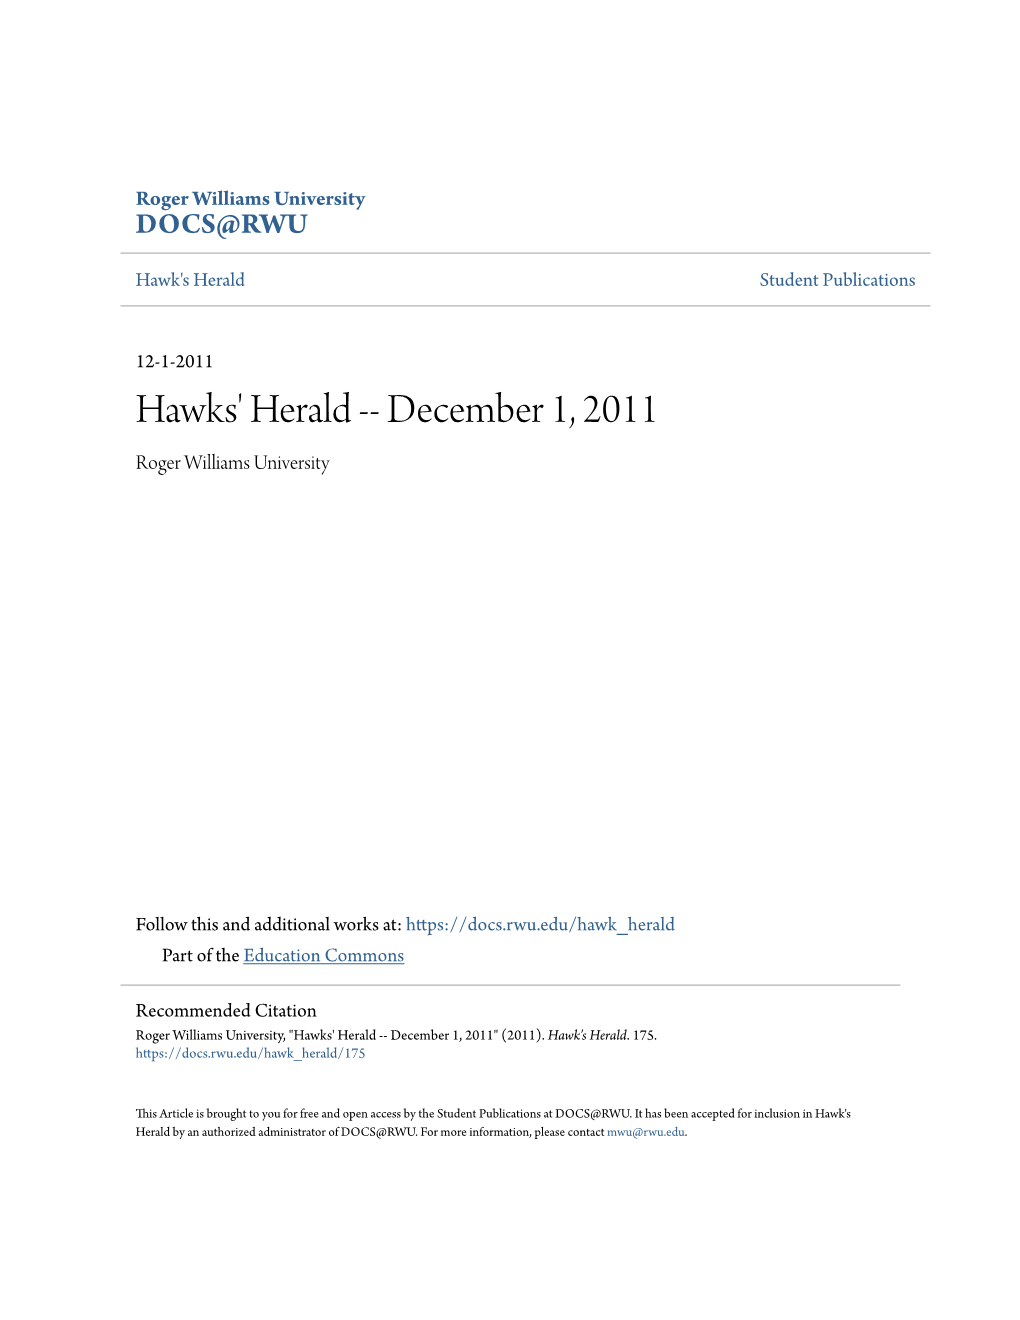 Hawks' Herald -- December 1, 2011 Roger Williams University